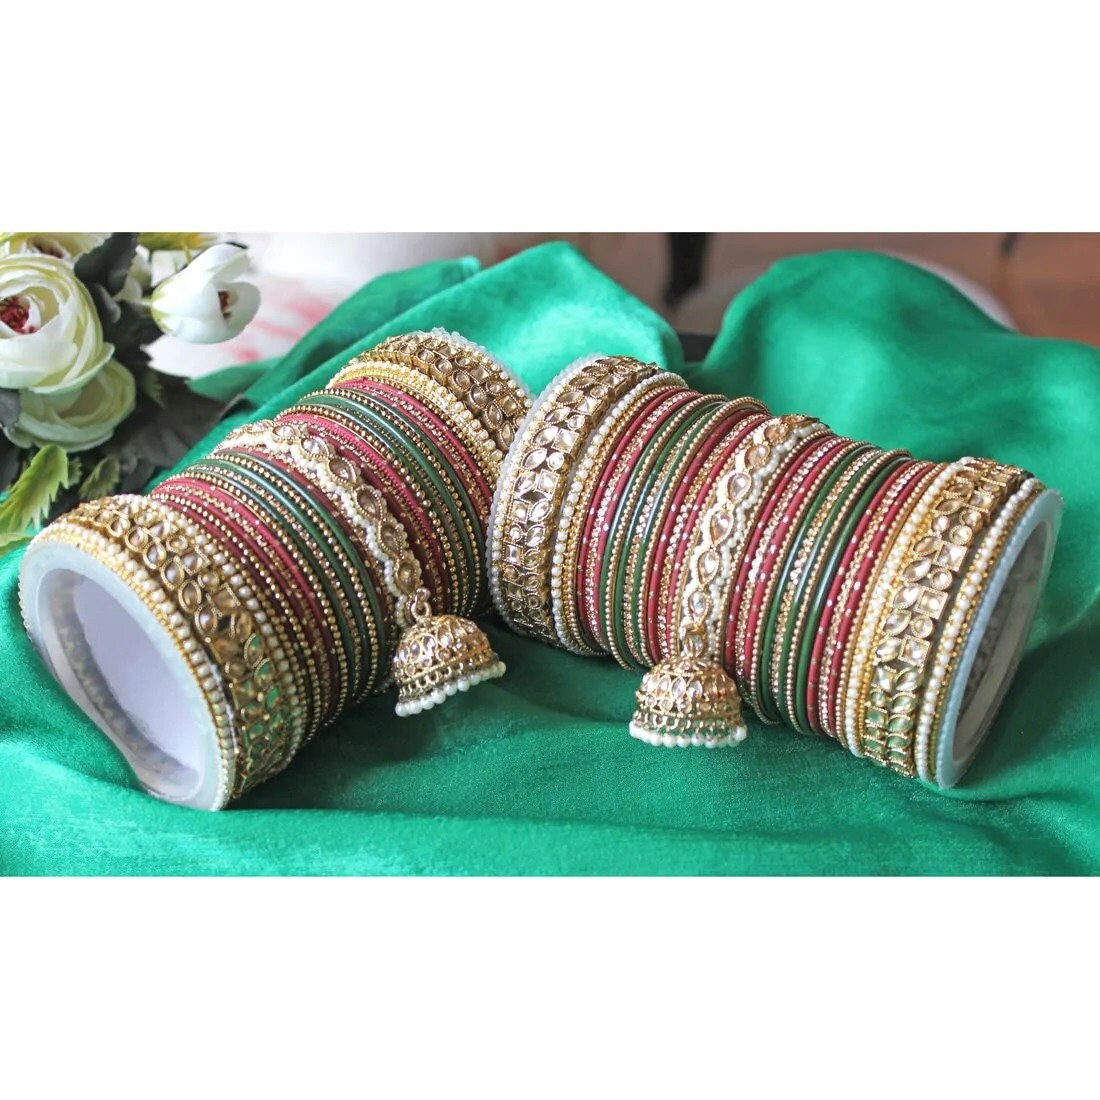 Indian Wedding Bangles With Stone Work Wedding Bangles Indian Jewelry with Jhumki Border